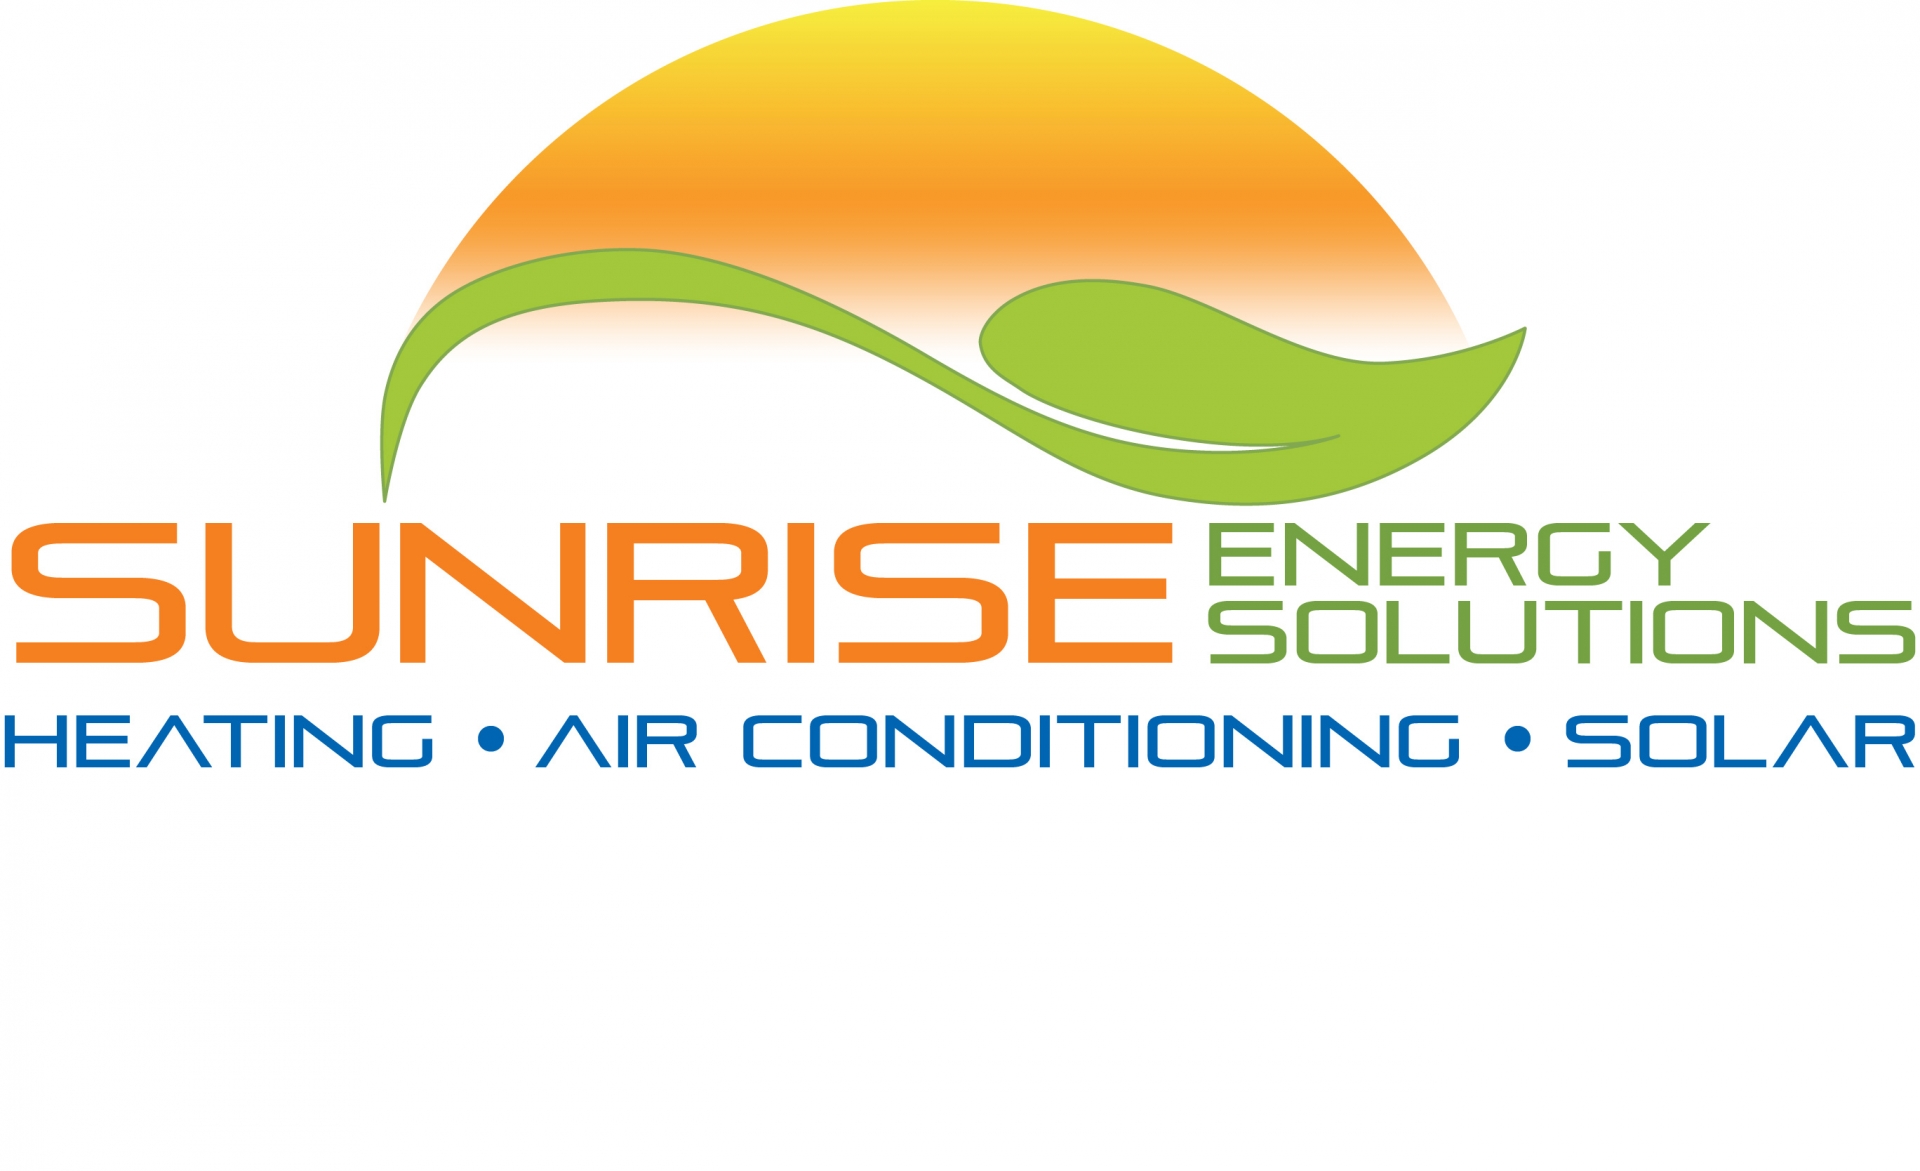 Sunrise Energy Solutions, Inc. company logo